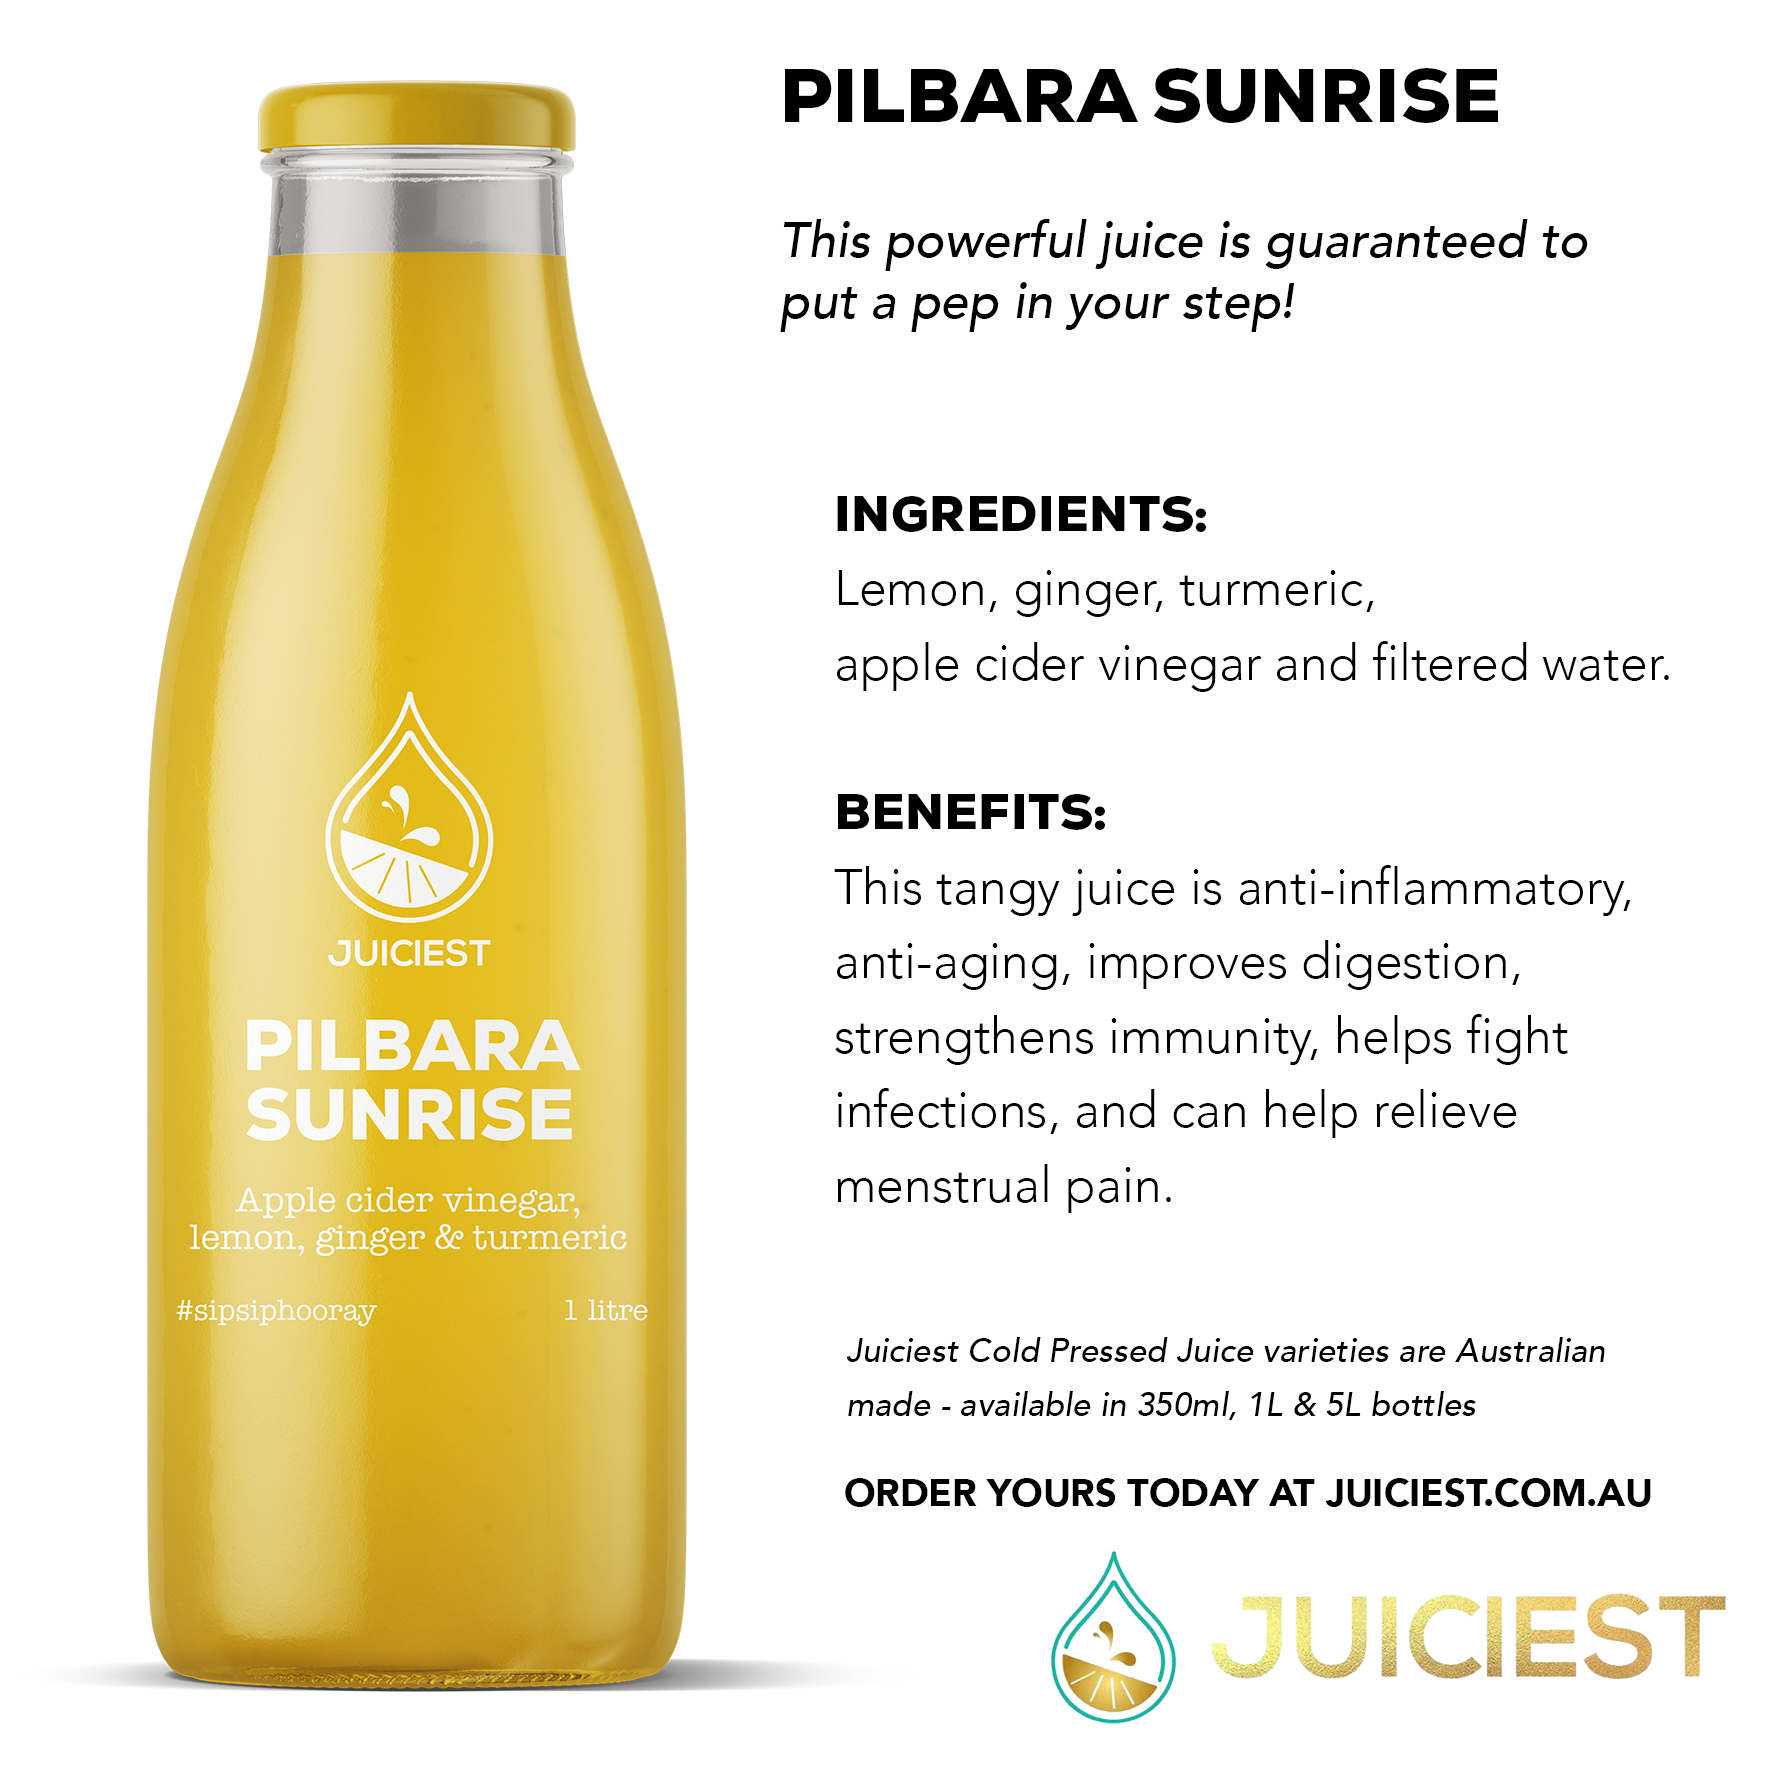 Juiciest Pilbara Sunrise Infographic